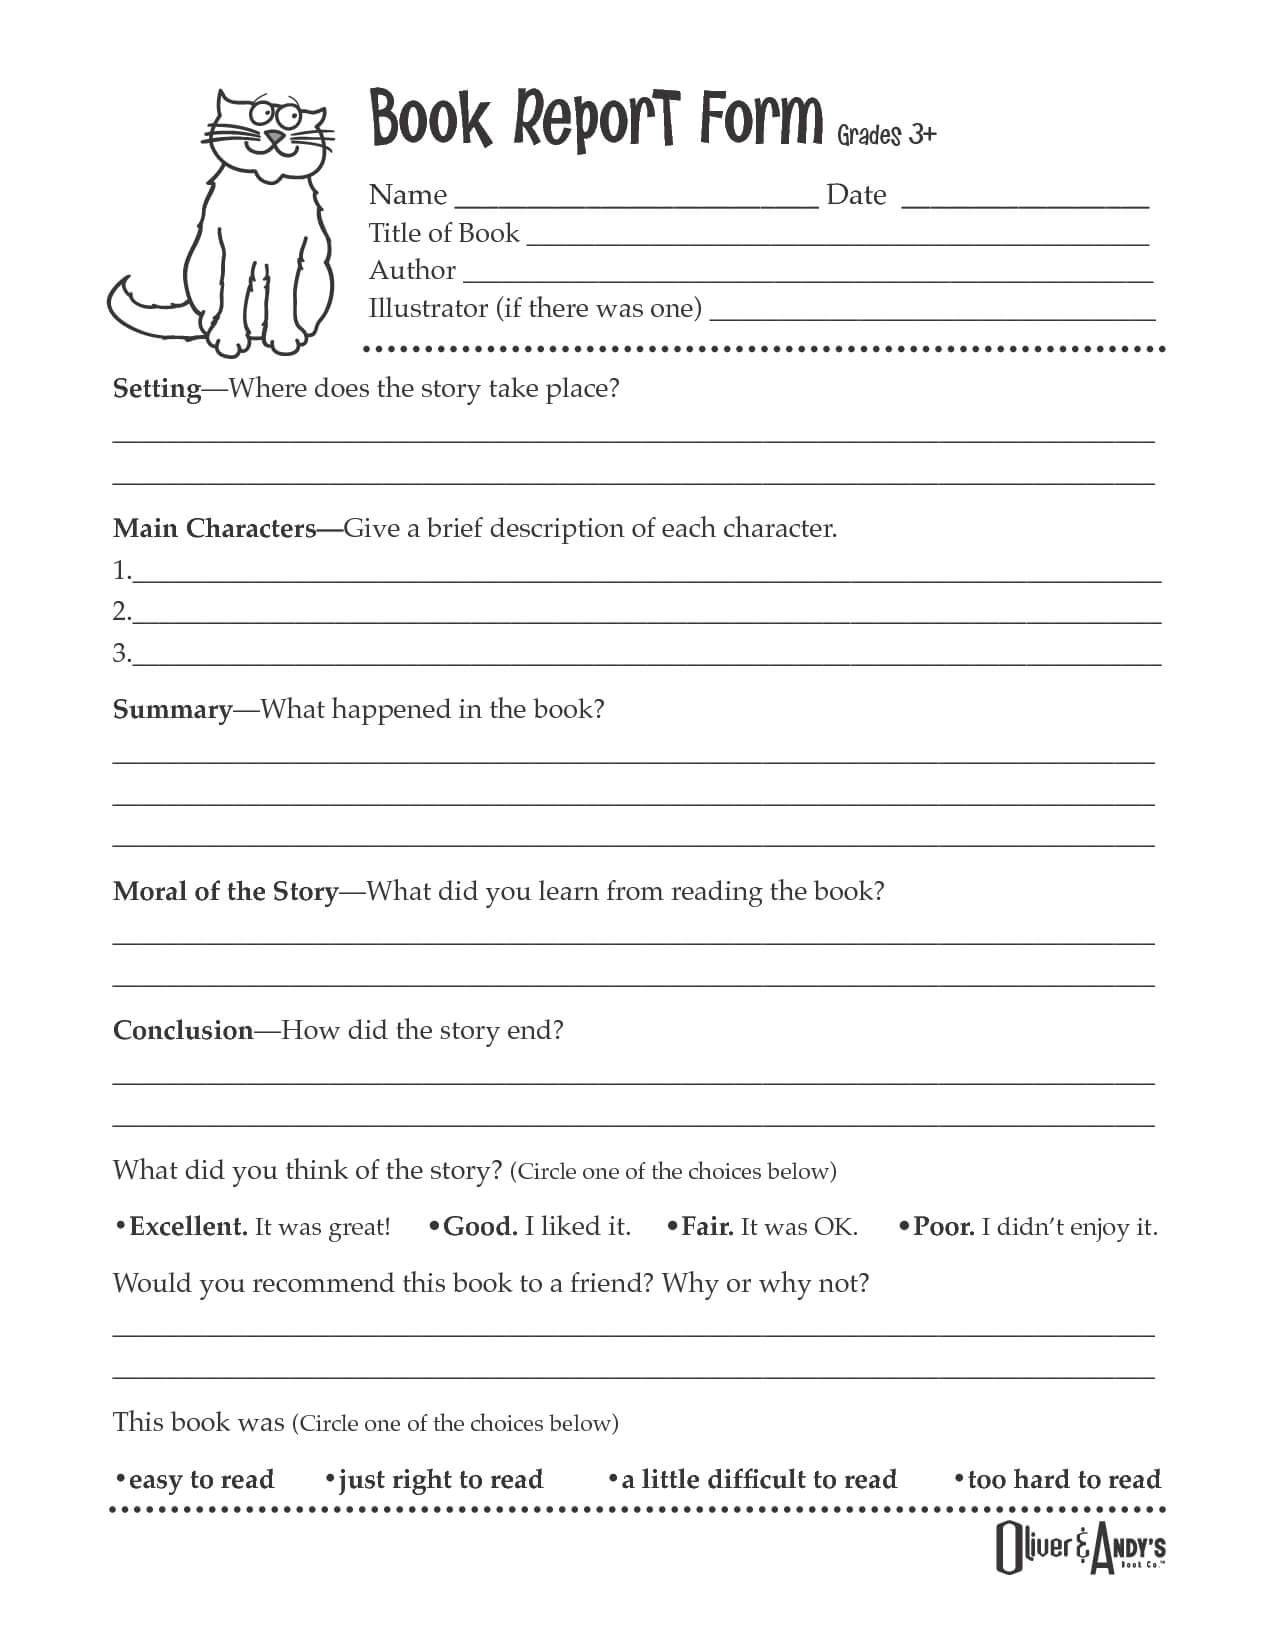 Second Grade Book Report Template | Book Report Form Grades For 2Nd Grade Book Report Template